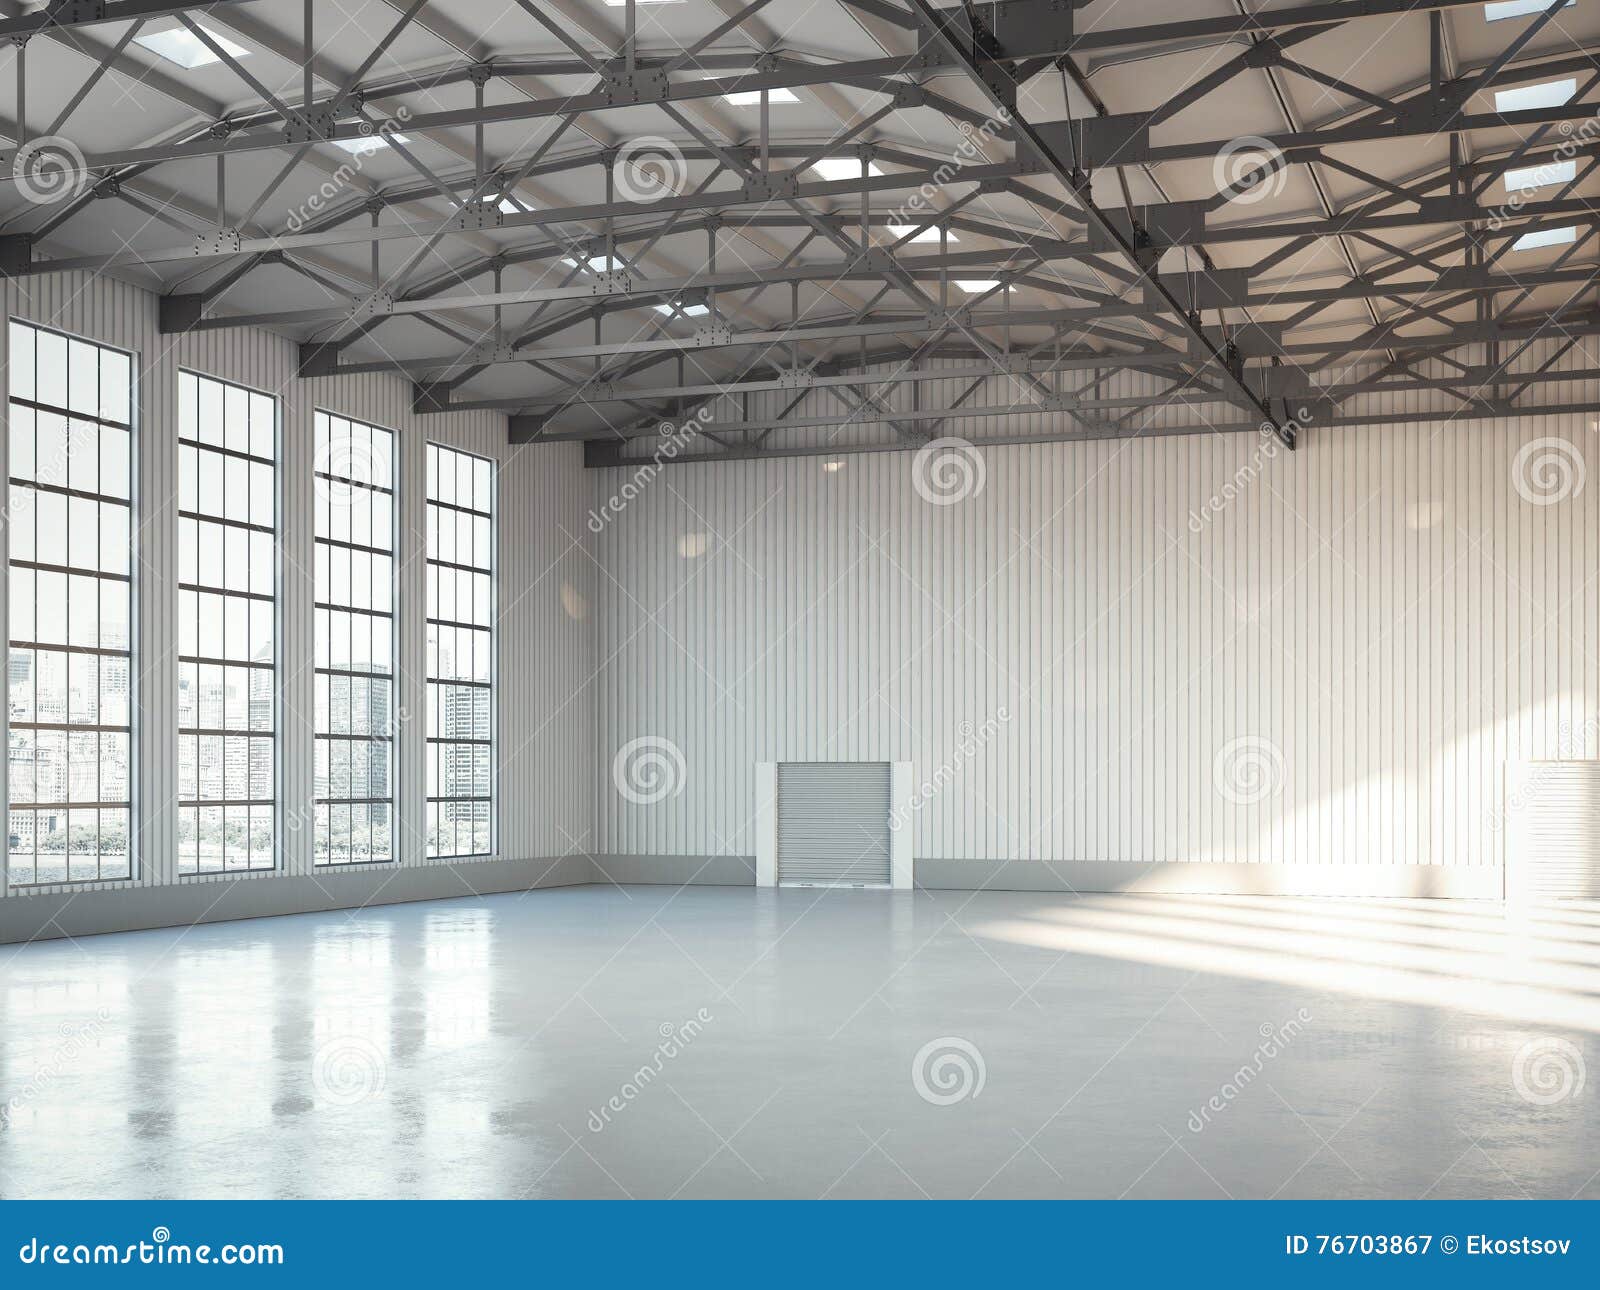 empty building bright hangar interior. 3d rendering